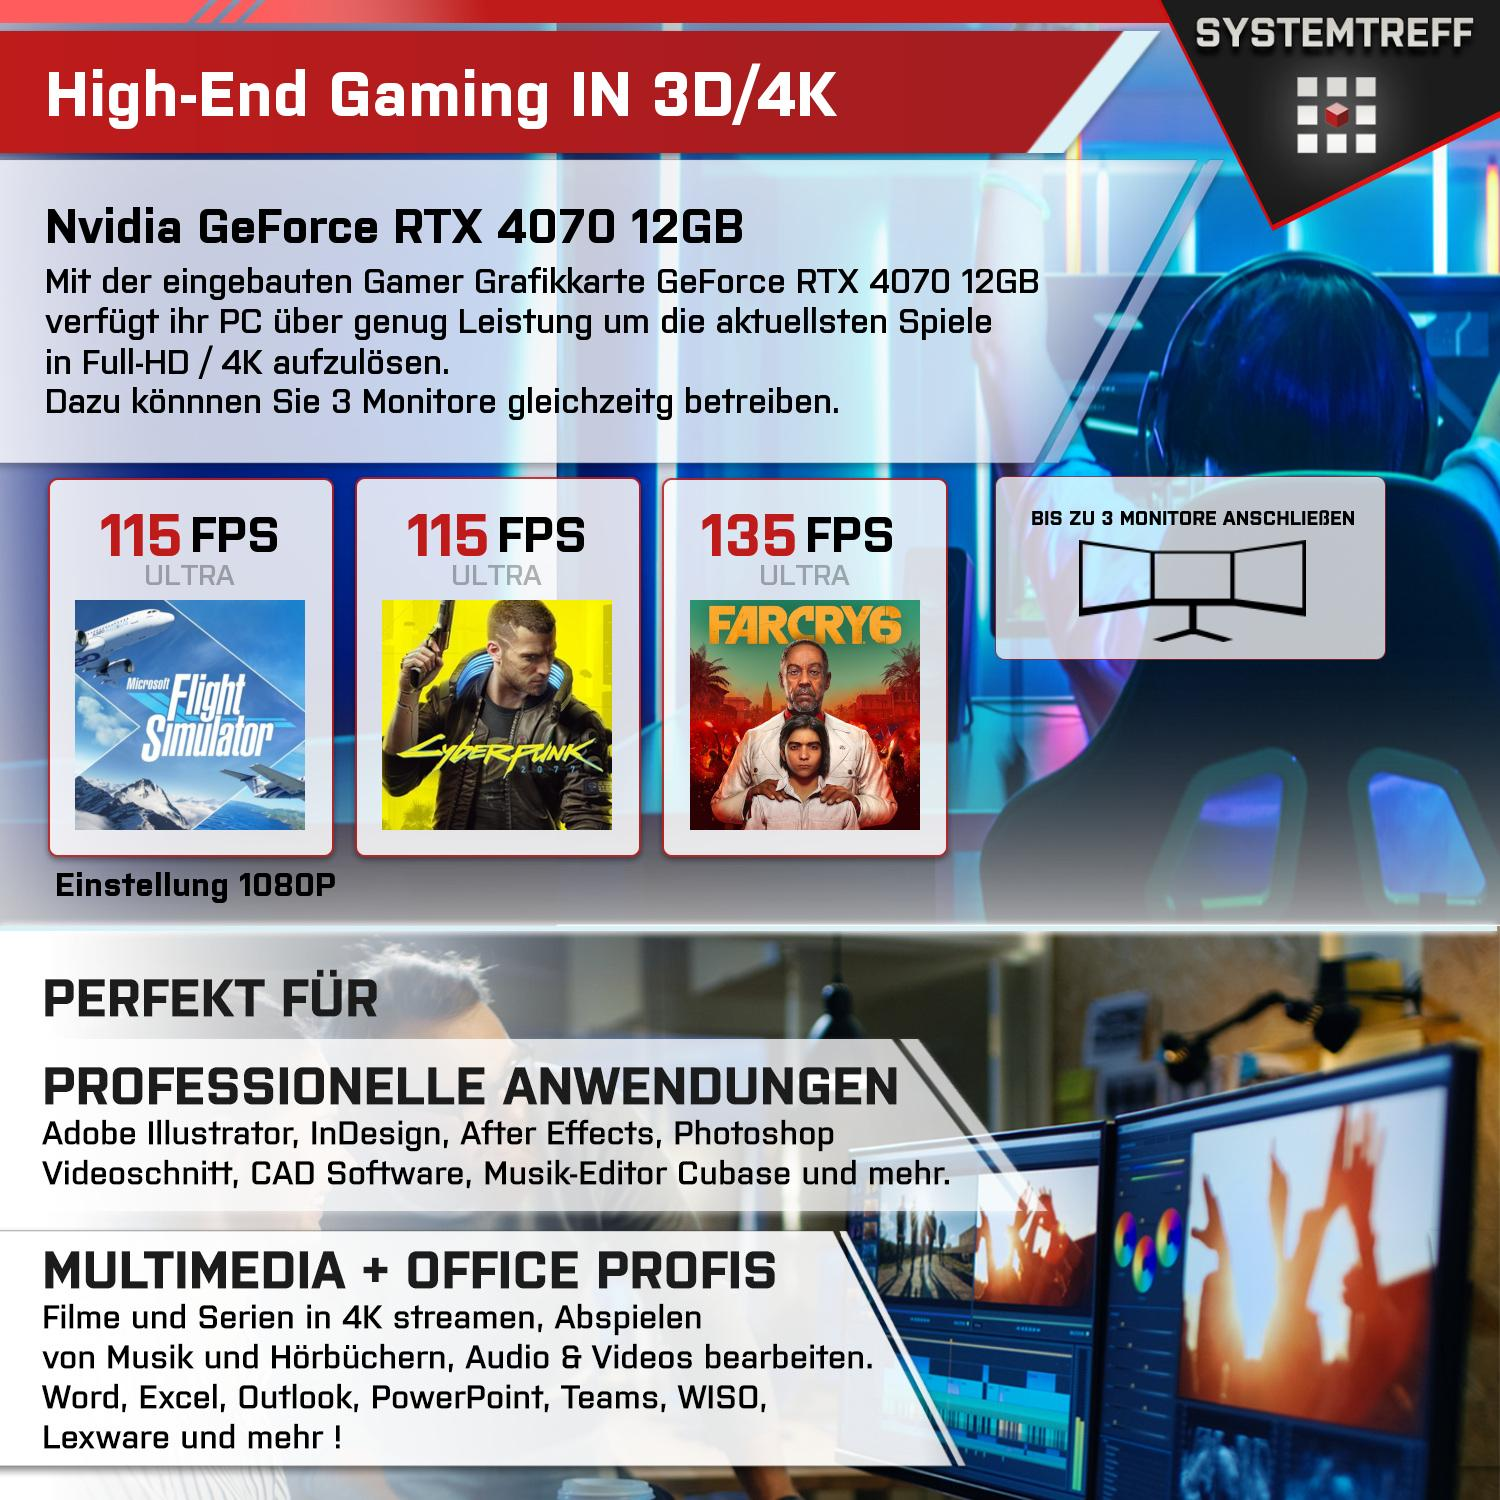 GeForce 11 SYSTEMTREFF Ryzen™ High-End GB 1000 RAM, Gaming 7 7800X3D, GB PC 32 mit RTX™ Gaming AMD 7 Ryzen Pro, Windows NVIDIA 4070 mSSD, AMD Prozessor,